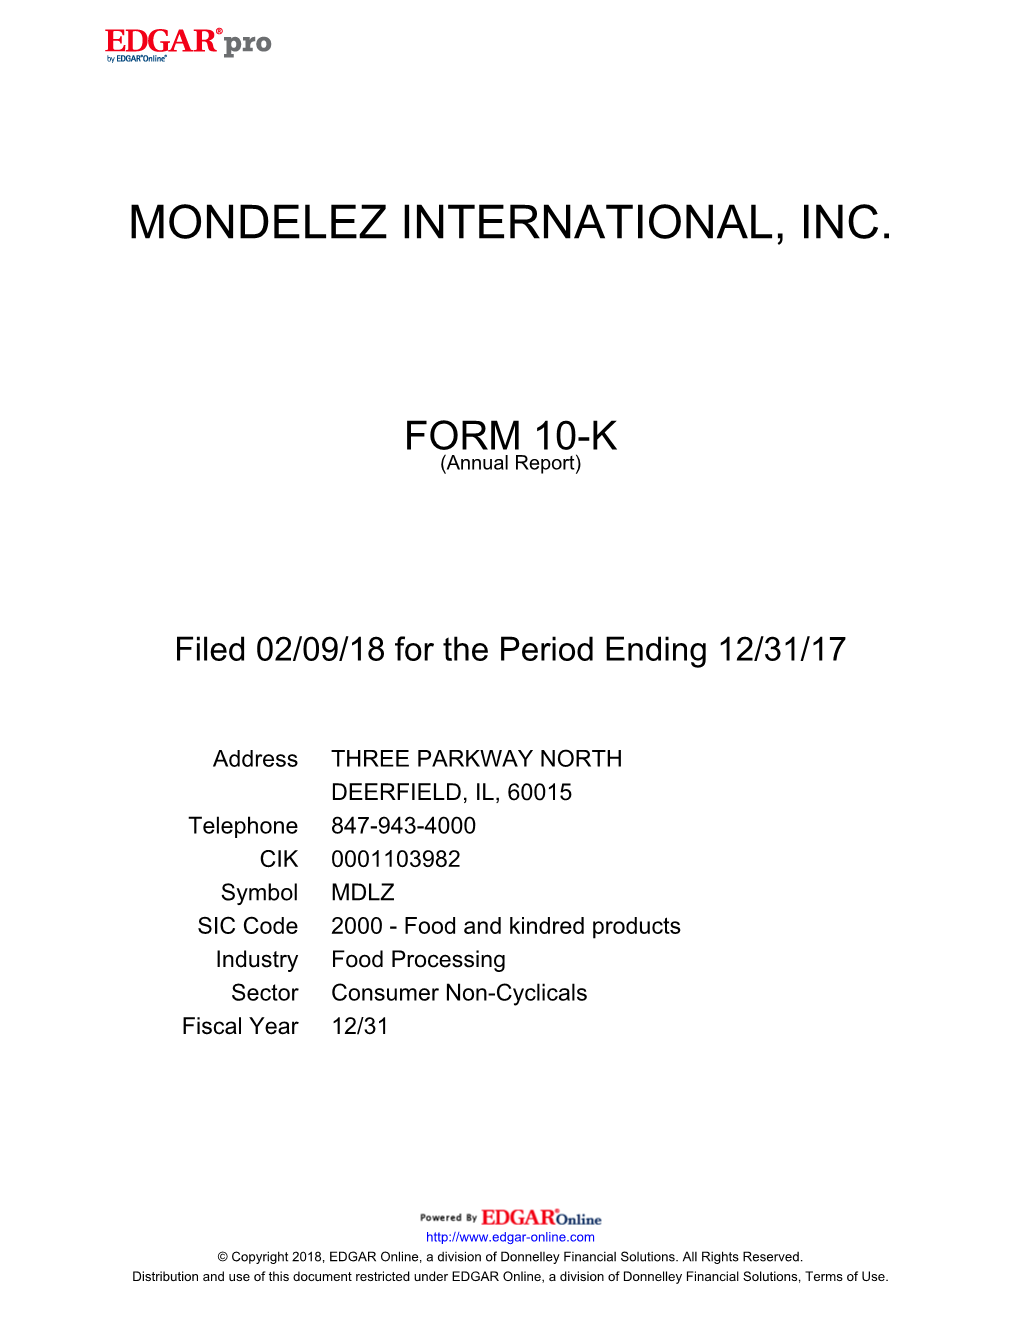 Mondelez International, Inc